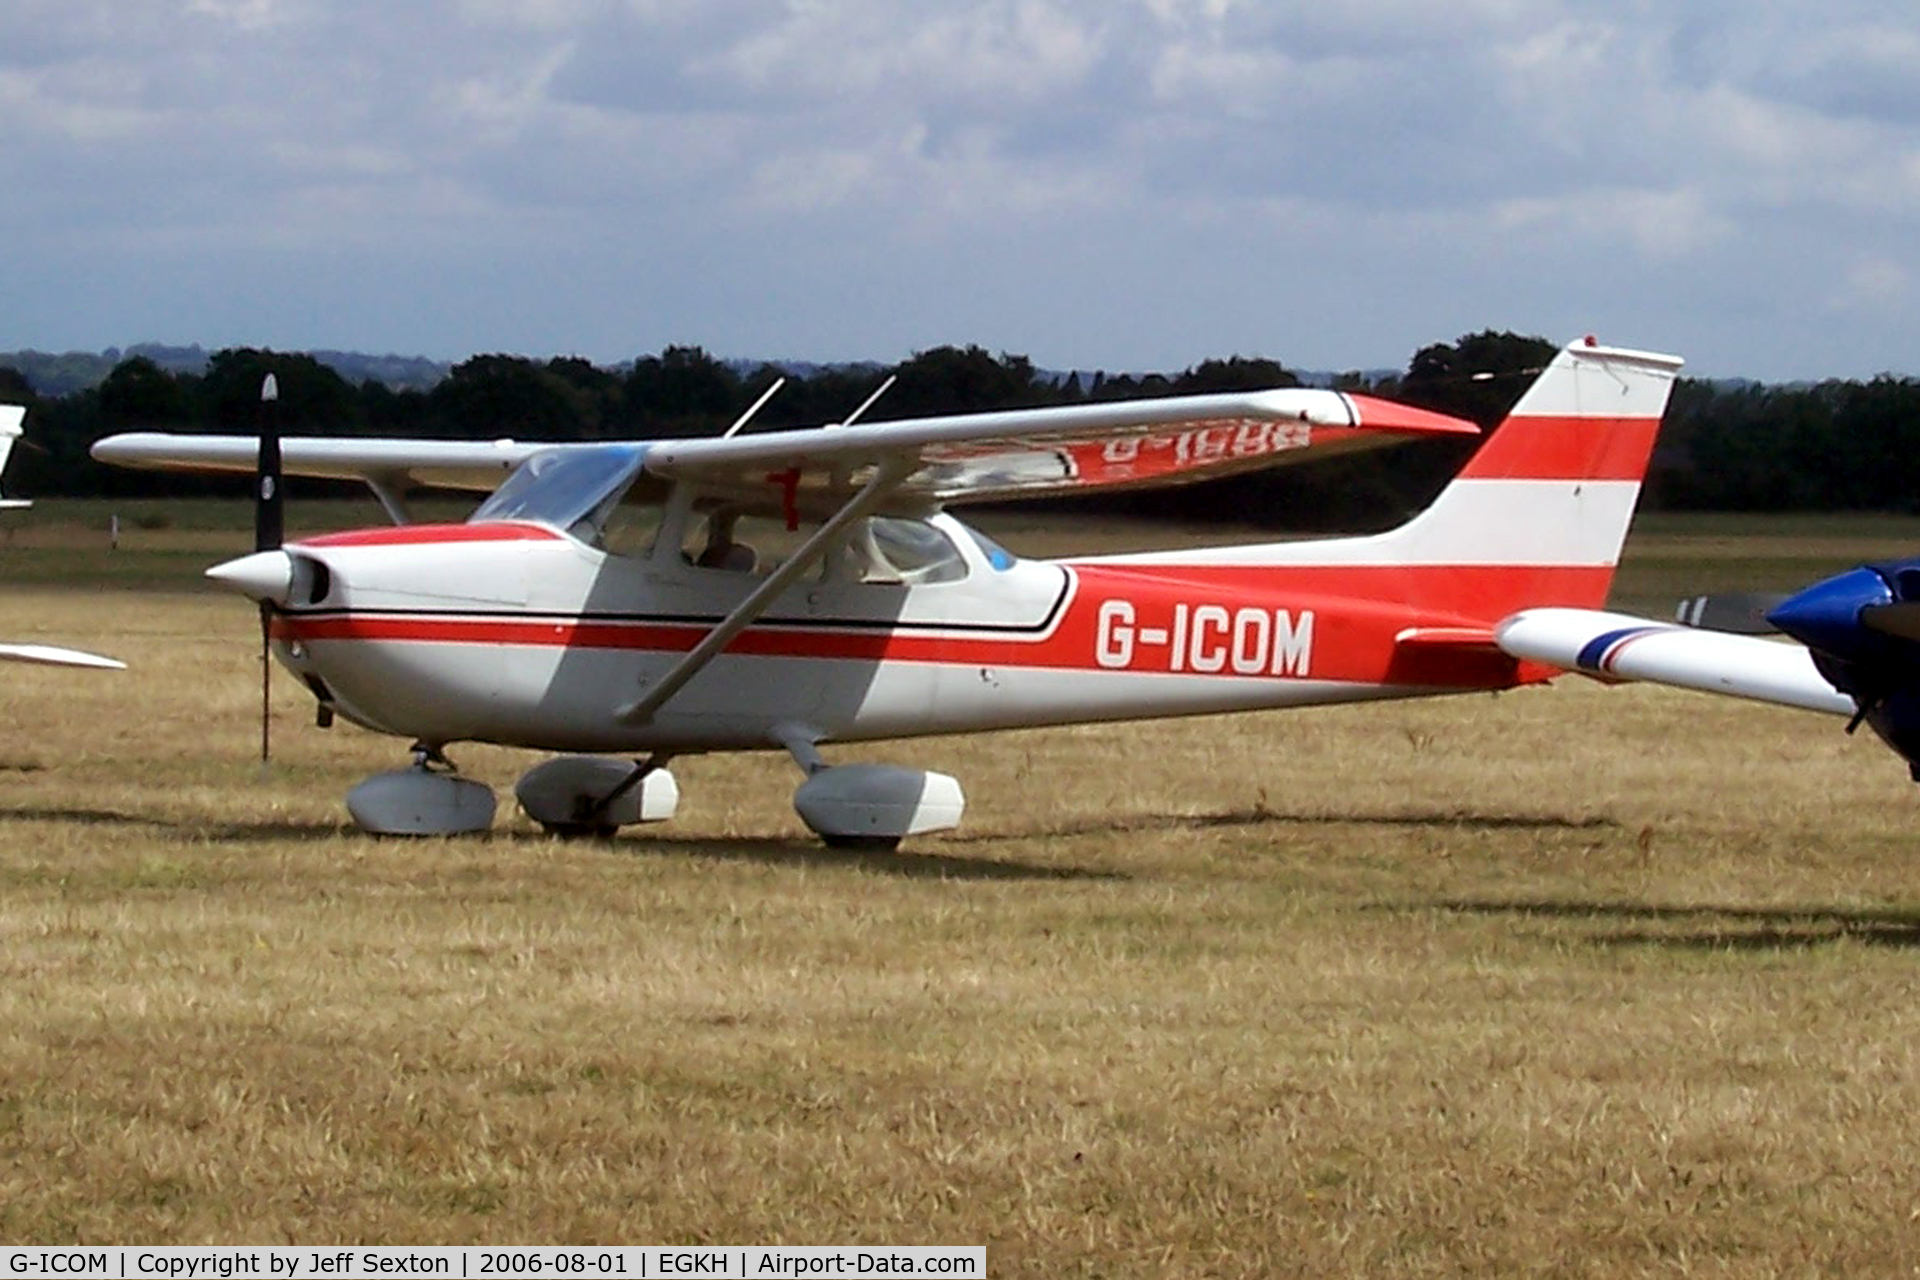 G-ICOM, 1974 Reims F172M Skyhawk Skyhawk C/N 1212, Cessna F172M Skyhawk at Lashenden/Headcorn England